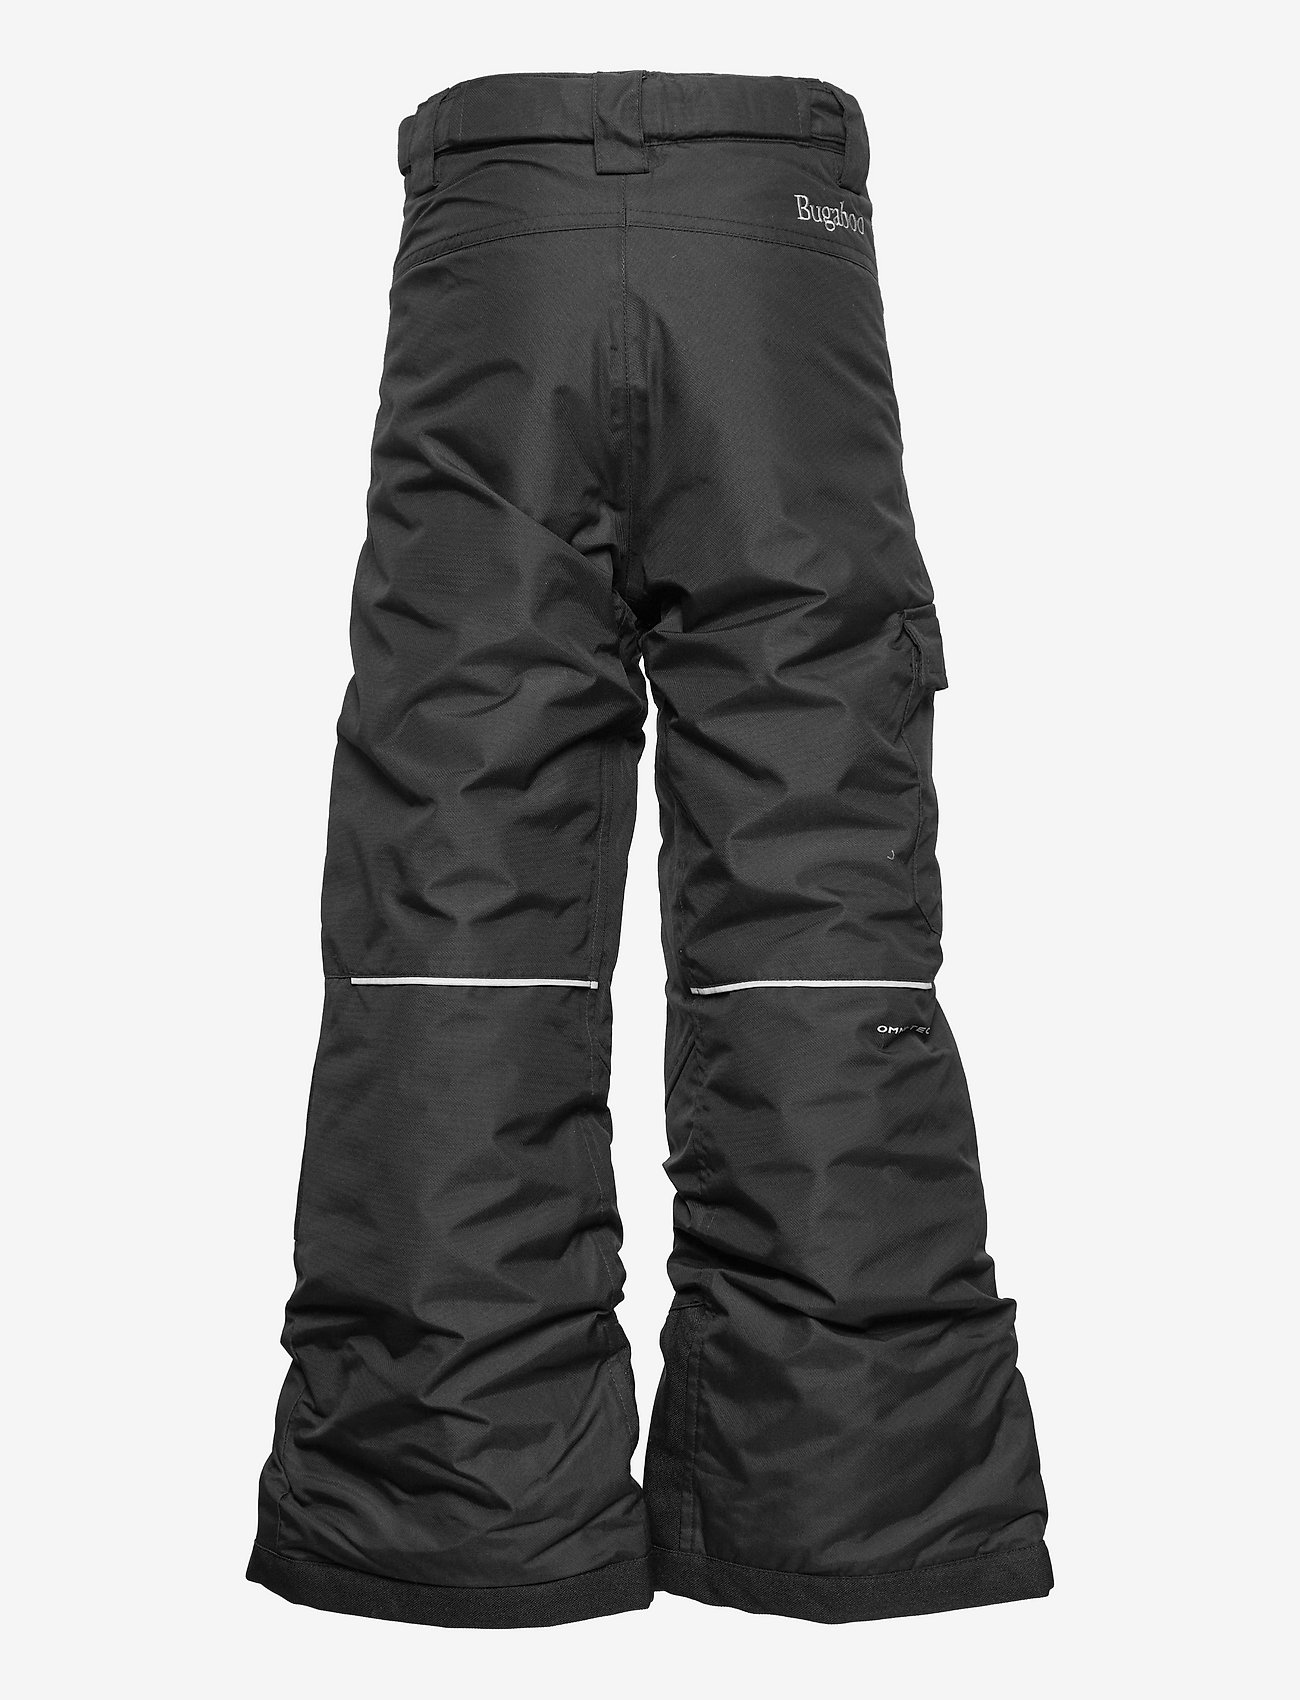 Columbia Sportswear - Bugaboo II Pant - hiihto- & lasketteluhousut - black - 1